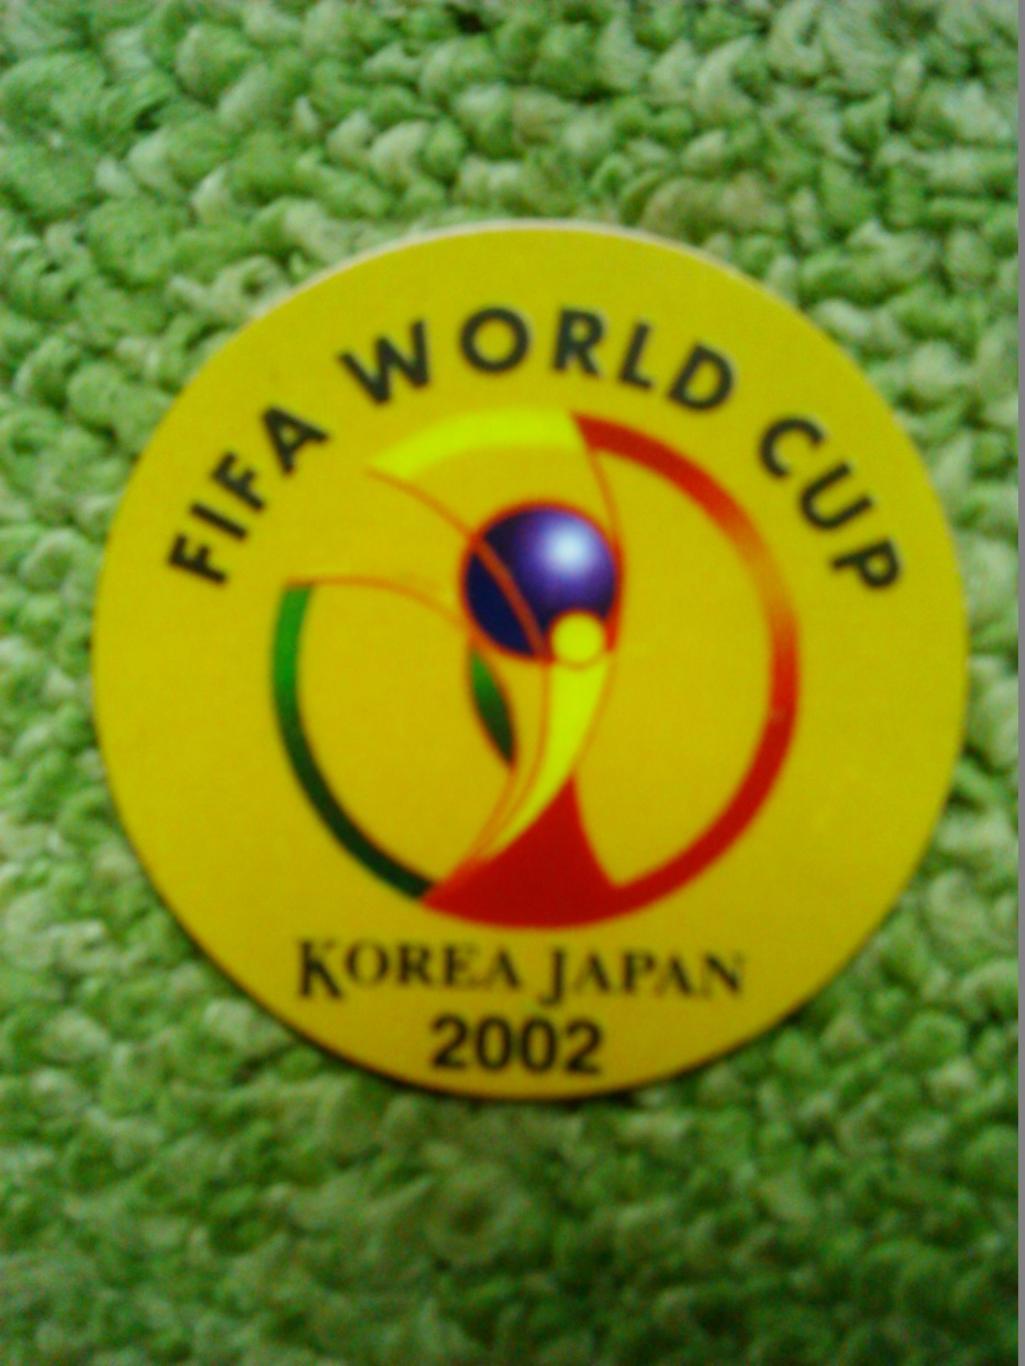 жетон NERLINGER Германия. FIFA WORLD CUP 2002. Оптом скидки до 45%! 1